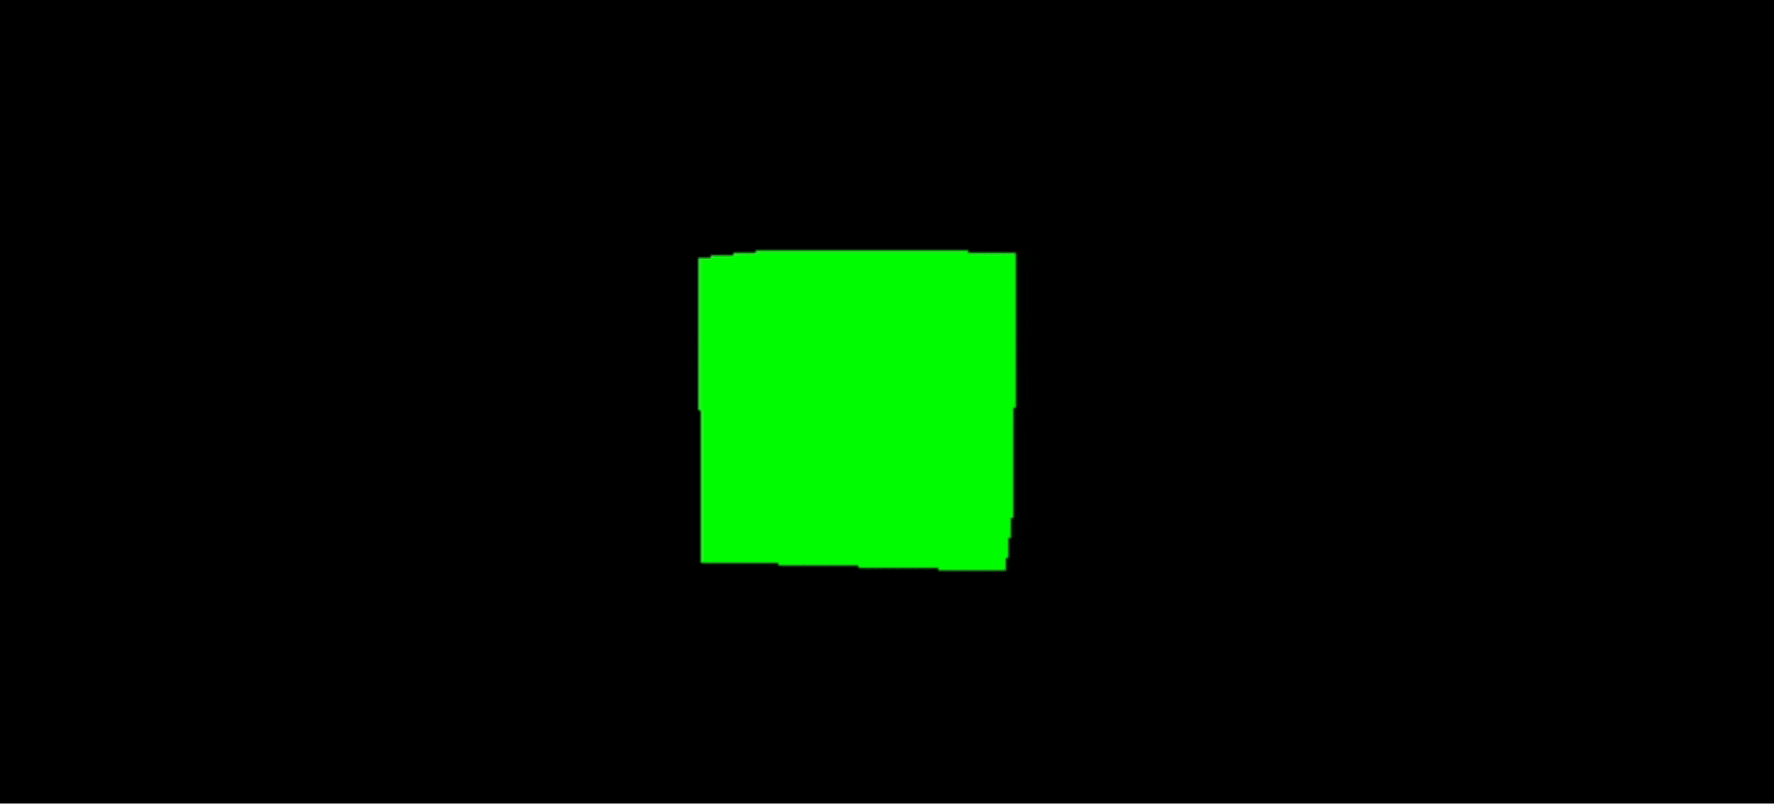 Three.js Cube Animation